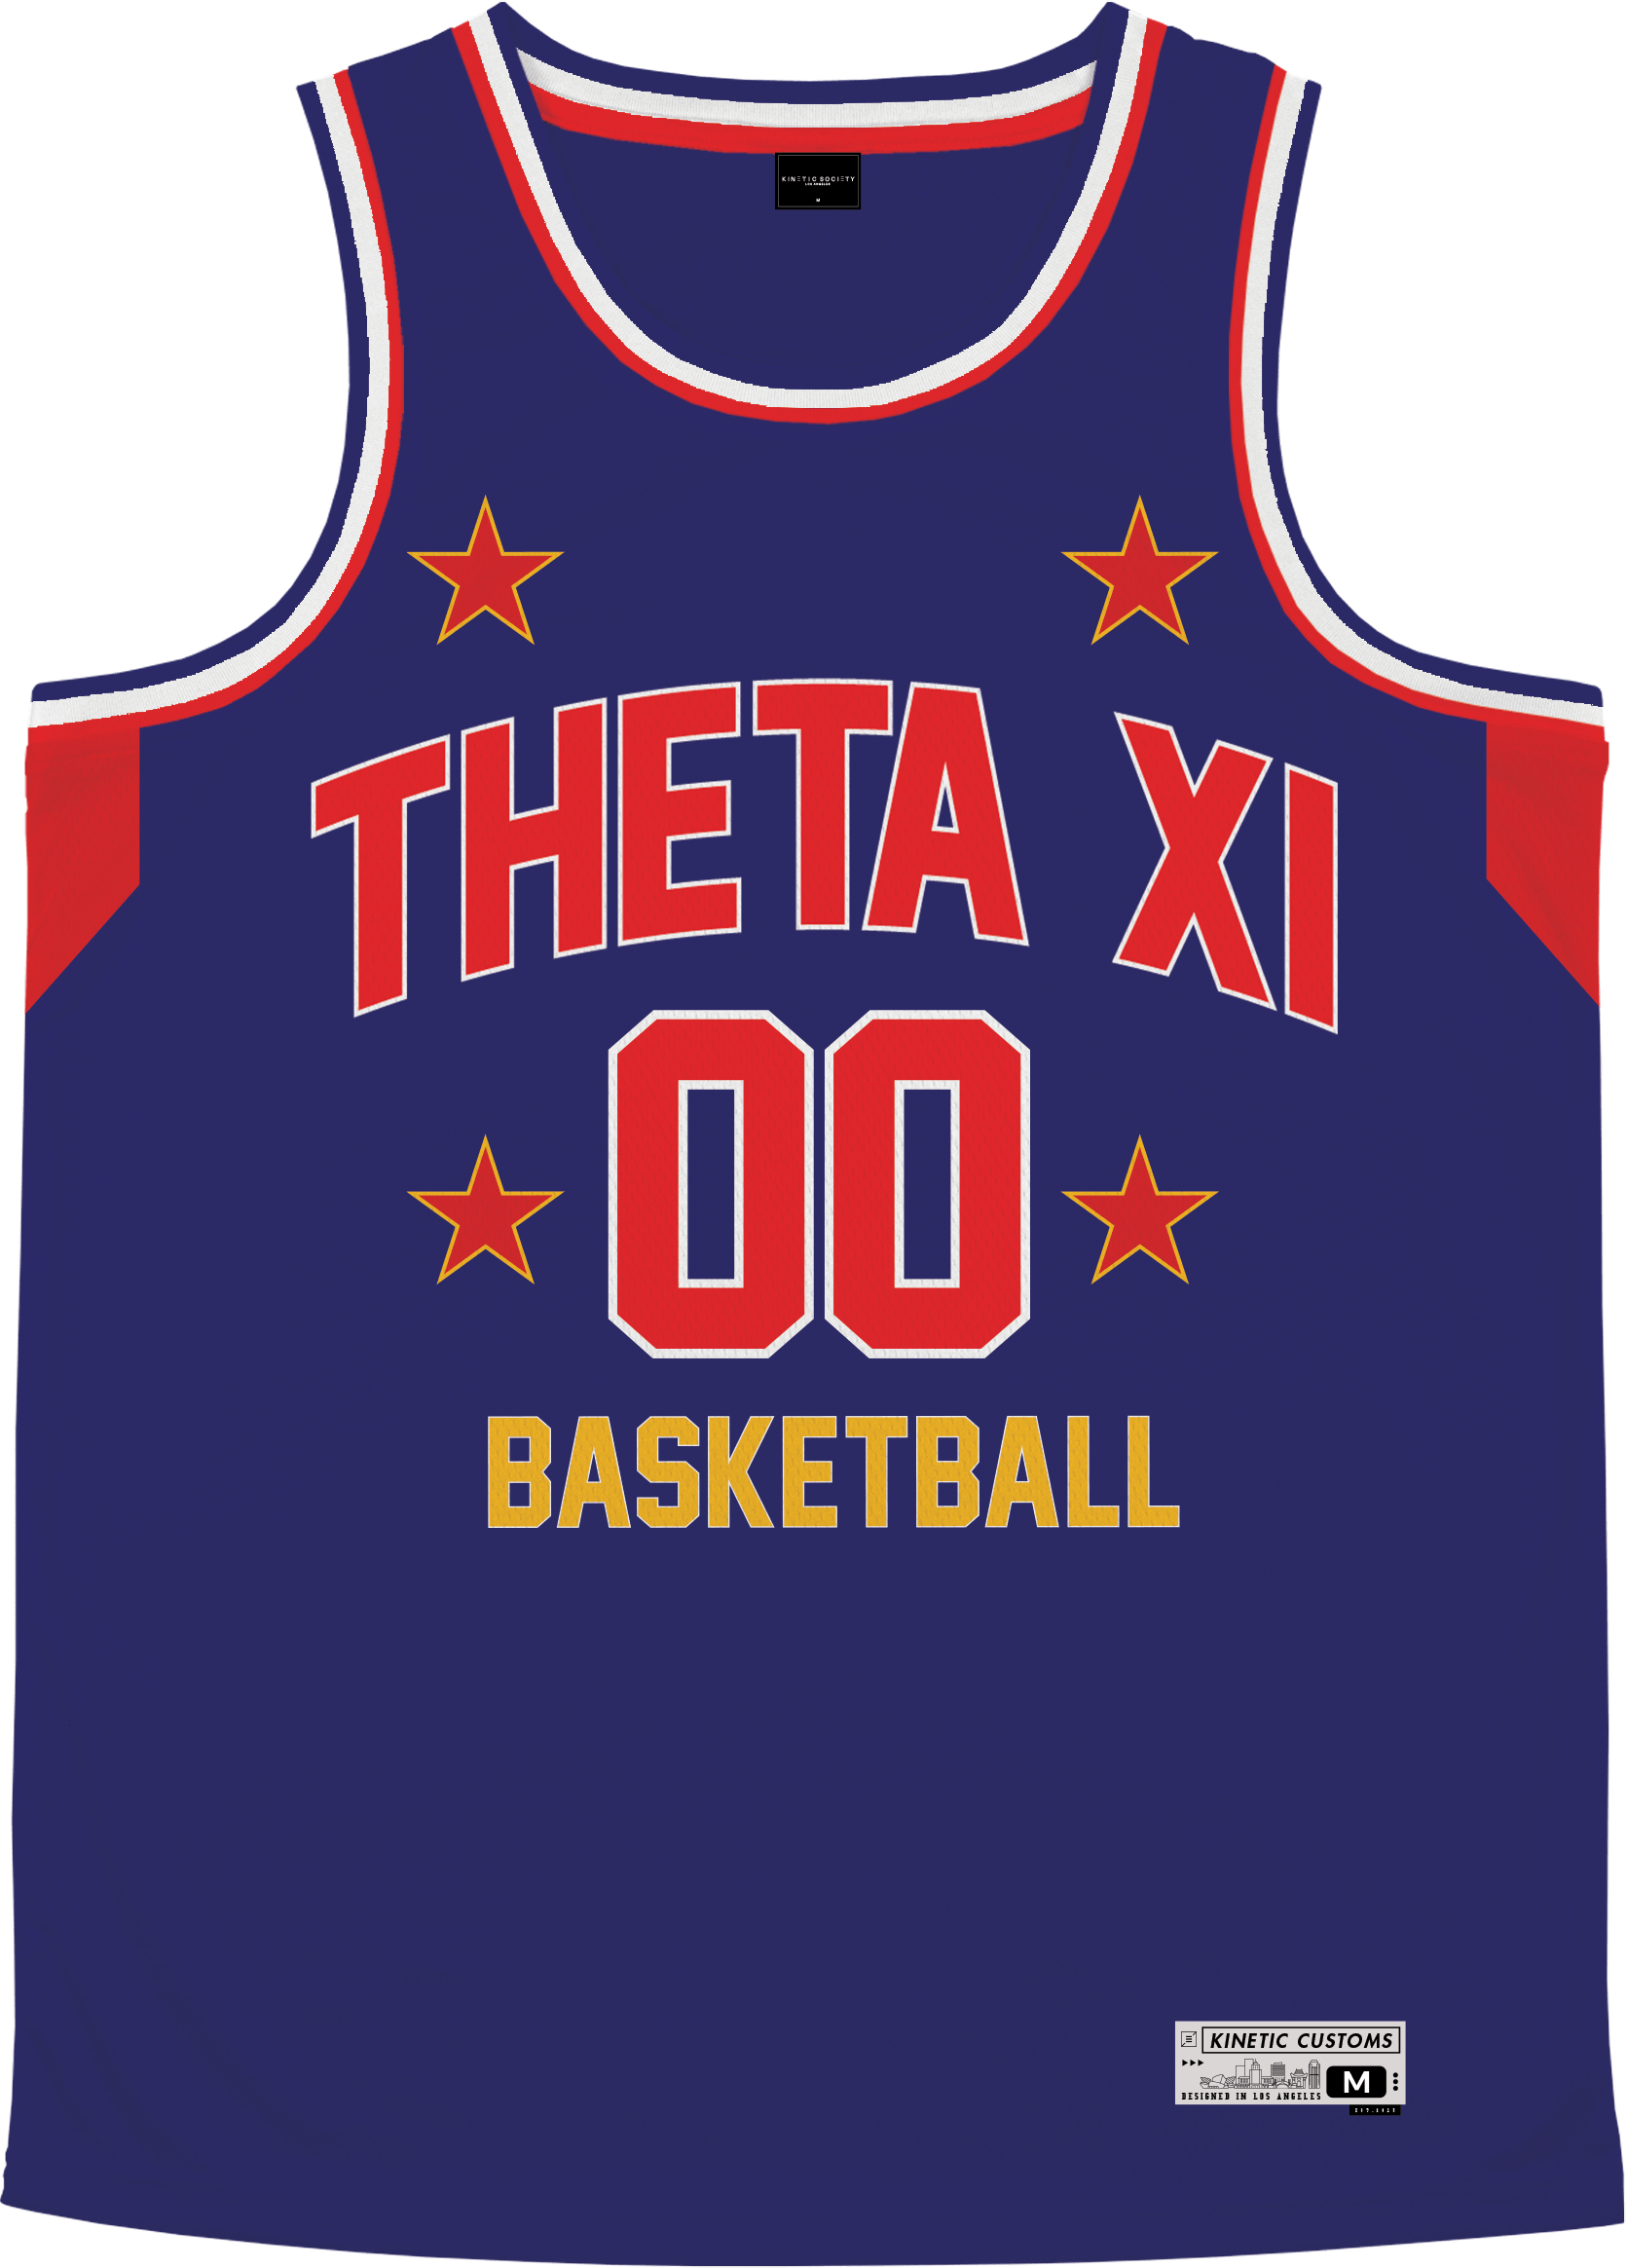 Theta Xi - Retro Ballers Basketball Jersey - Kinetic Society